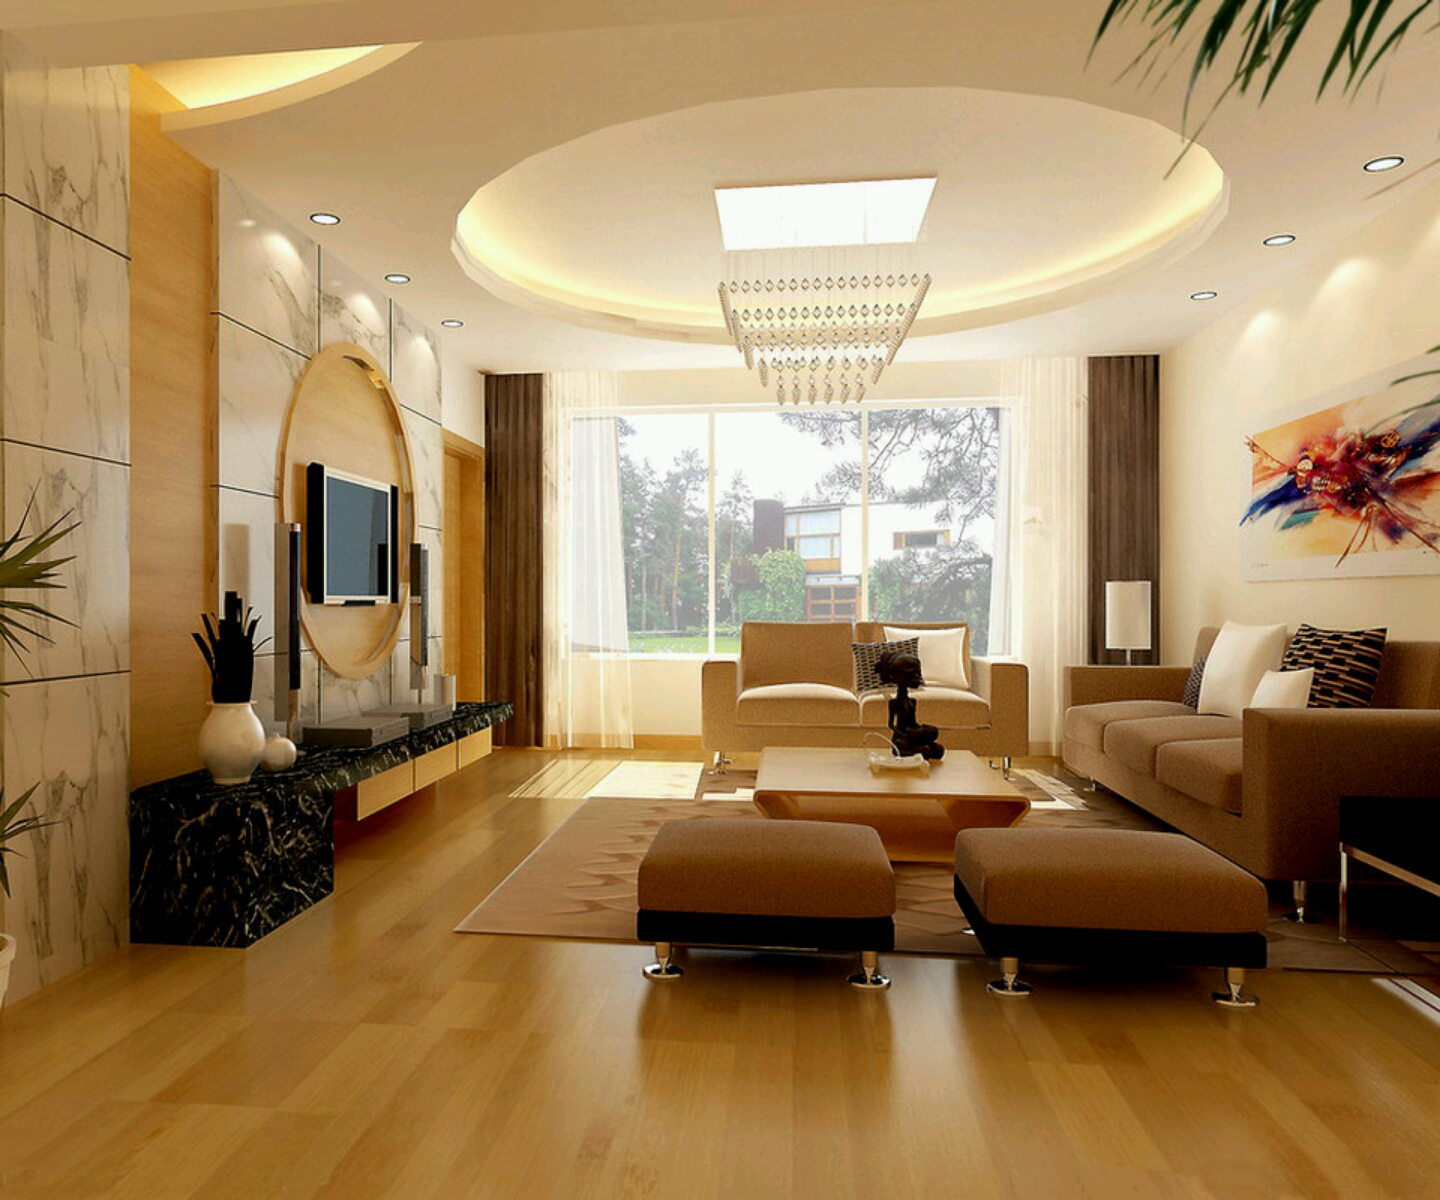 Modern interior decoration living rooms ceiling designs ...